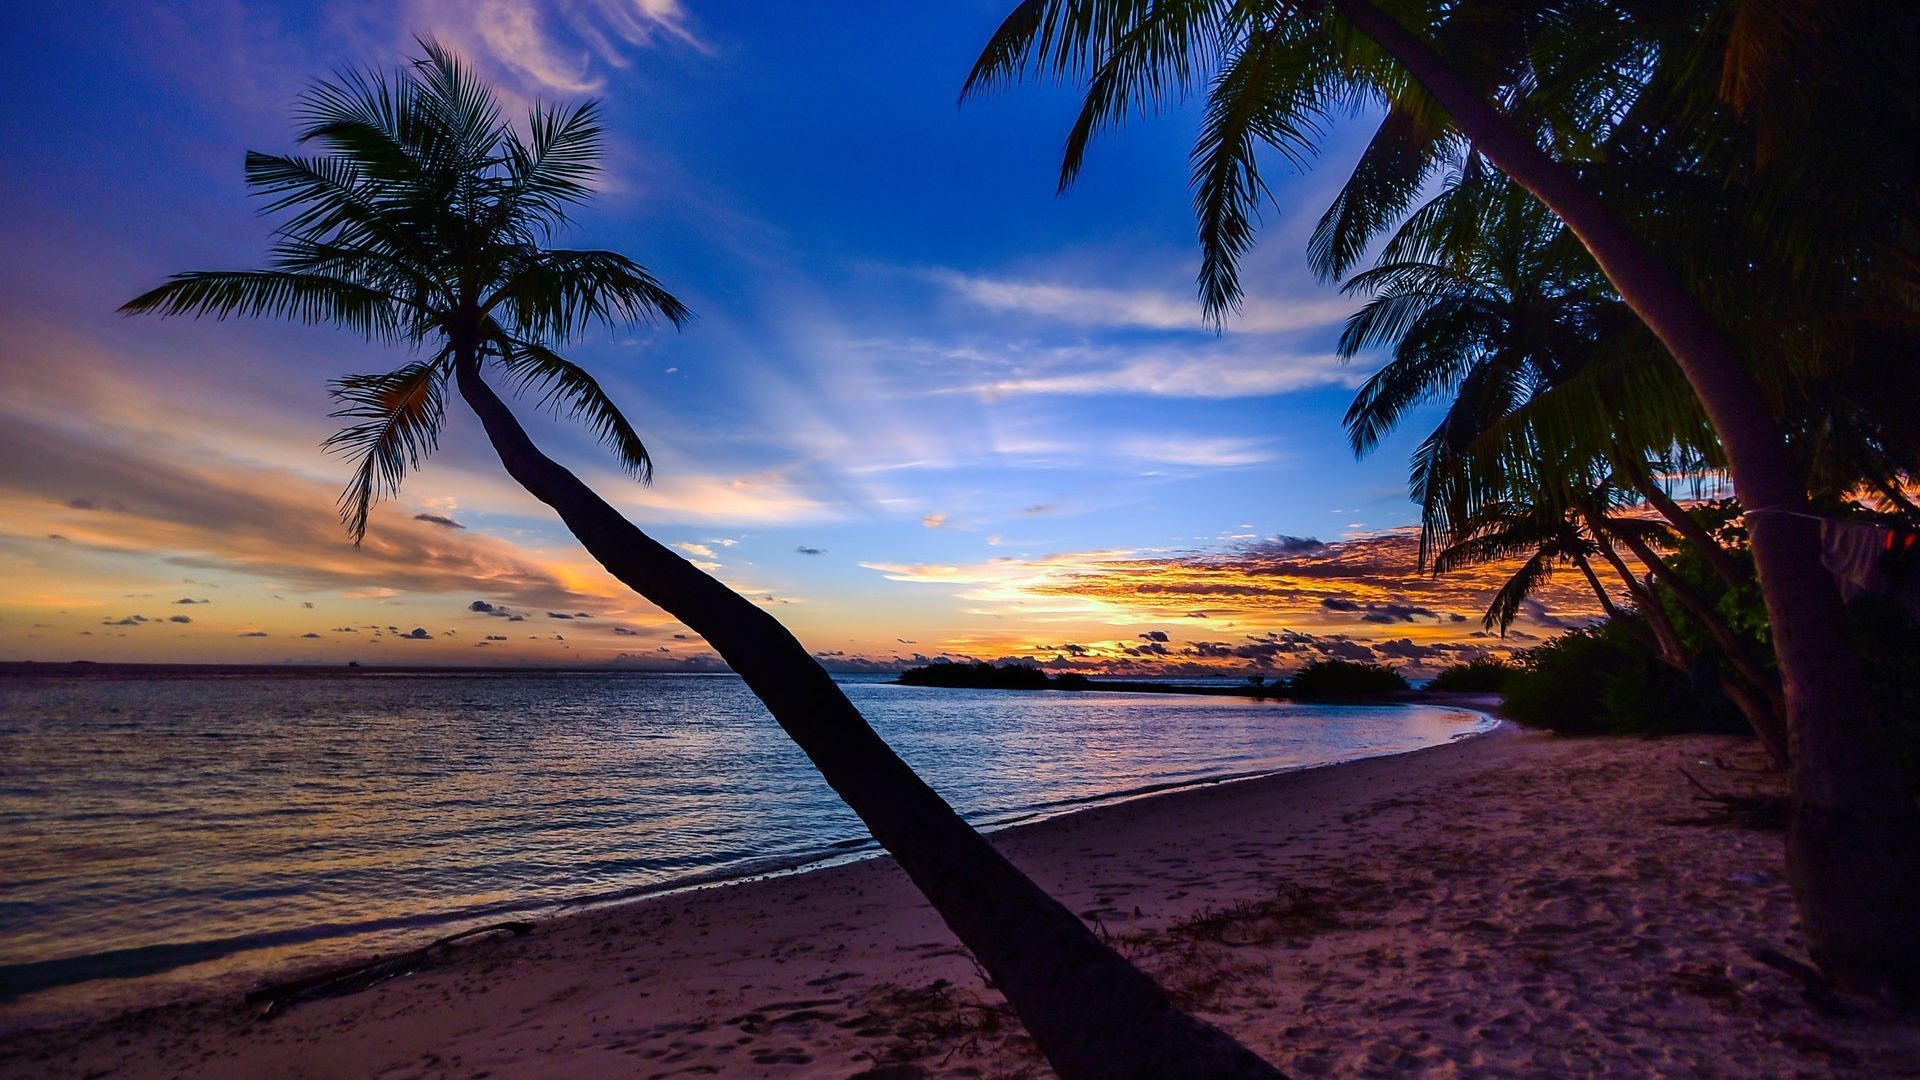 1920x1080 beach sunset desktop background, beautiful desktop background, images of  beach sunset, beautiful image